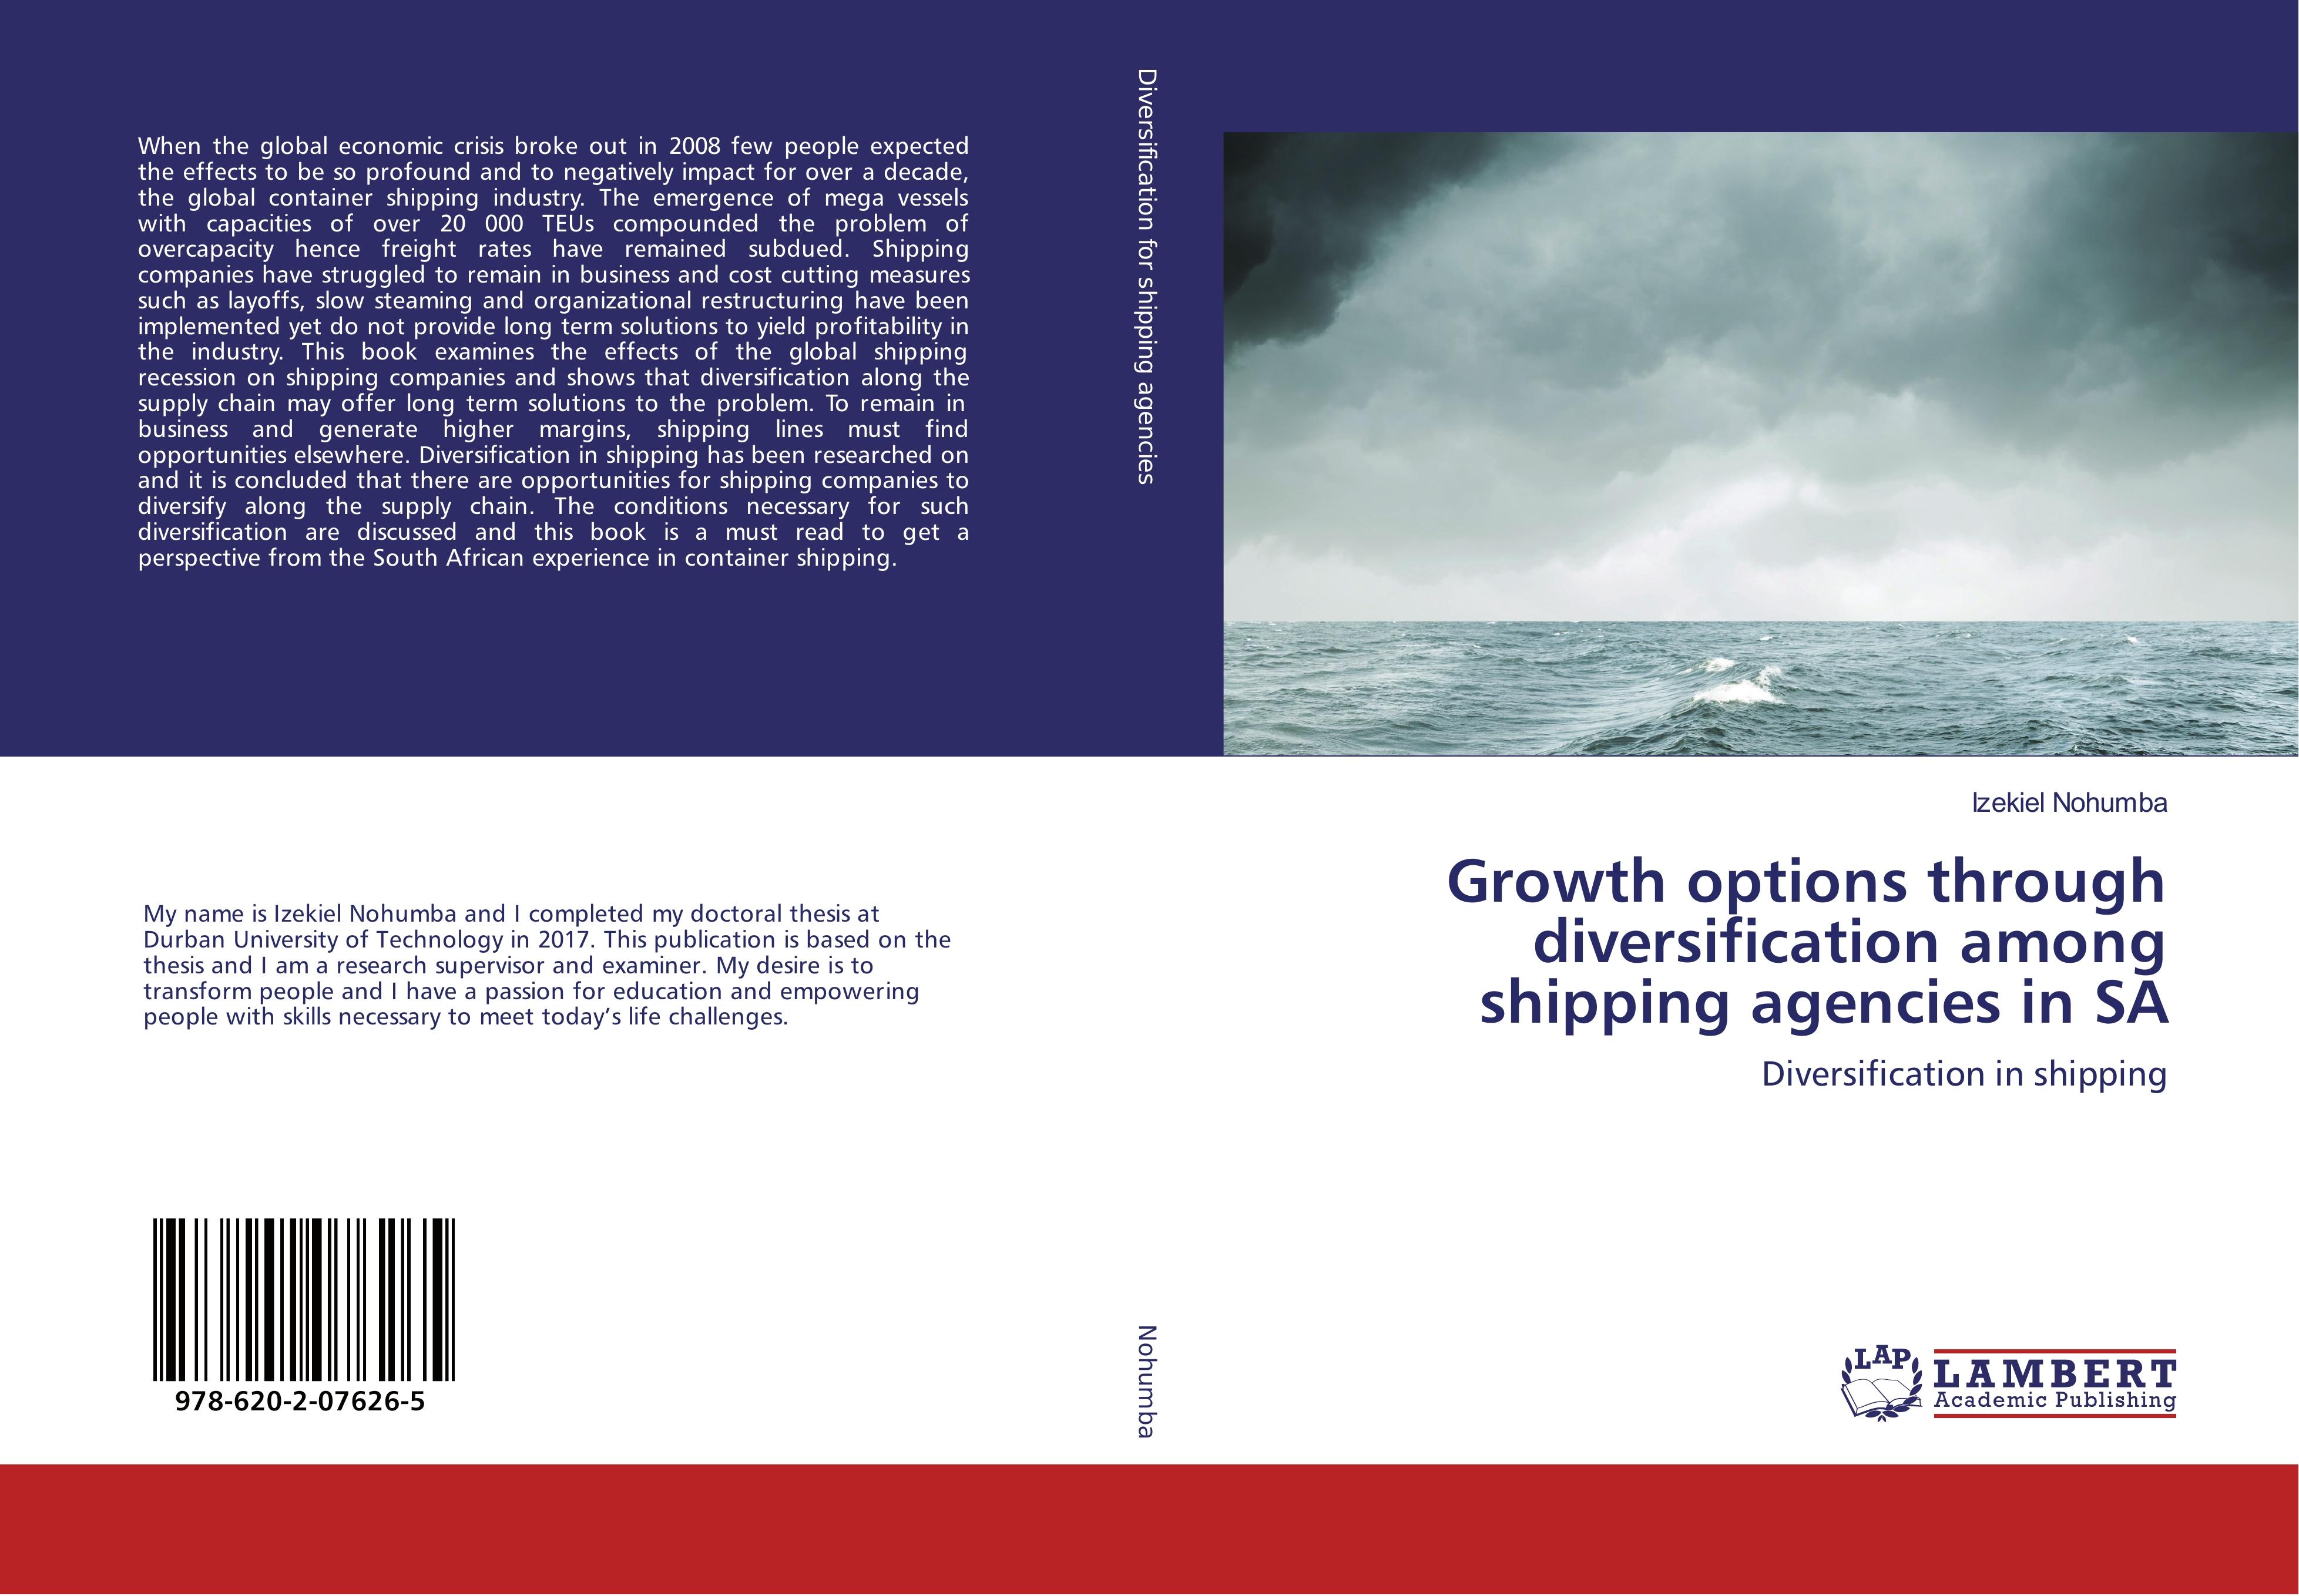 Growth options through diversification among shipping agencies in SA - Nohumba, Izekiel